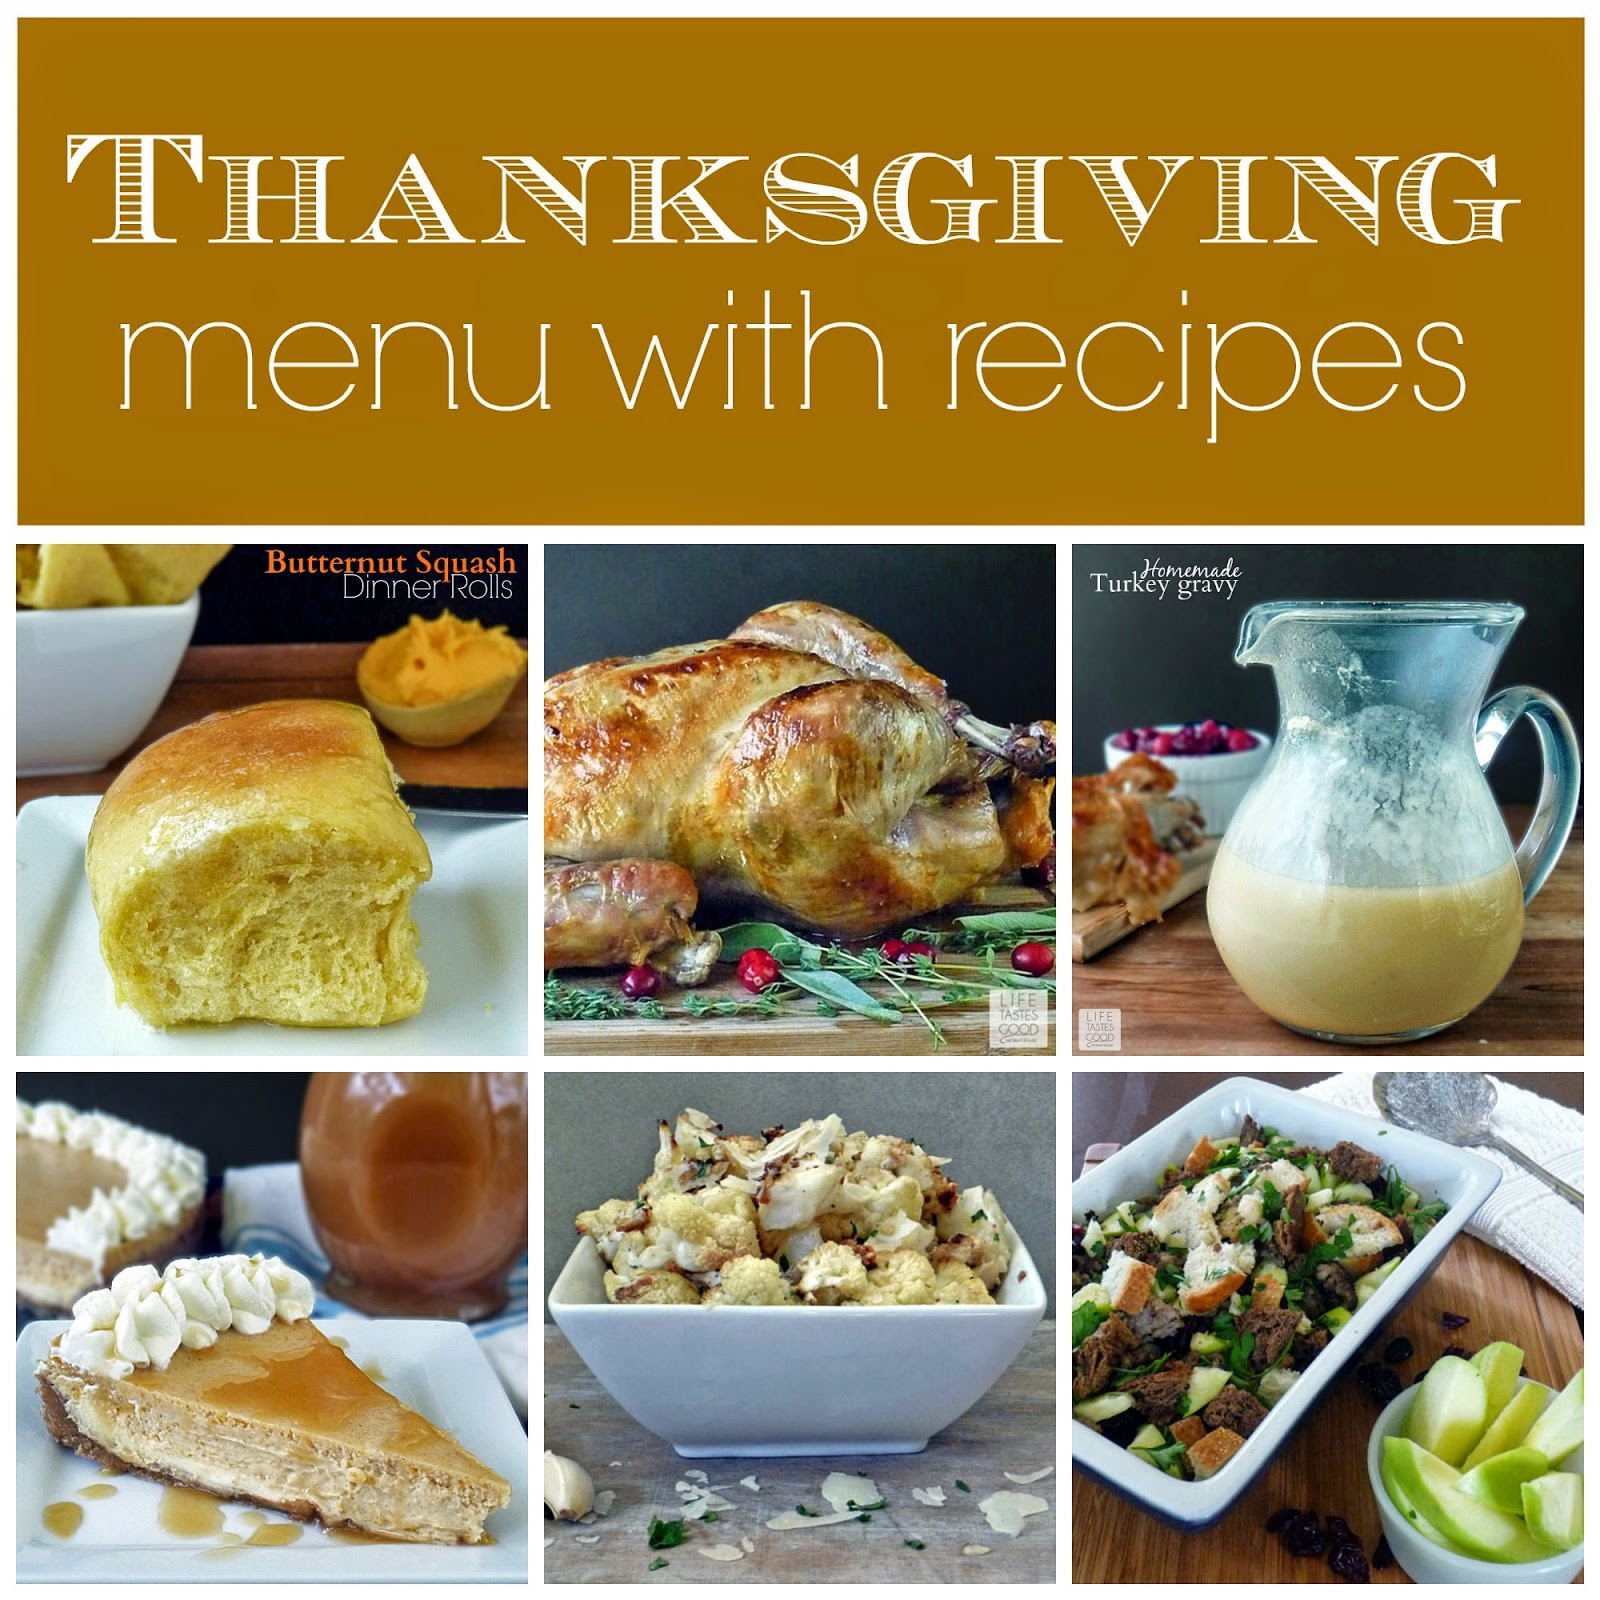 Recipes For Thanksgiving Dinner
 Thanksgiving Dinner Menu and Recipes